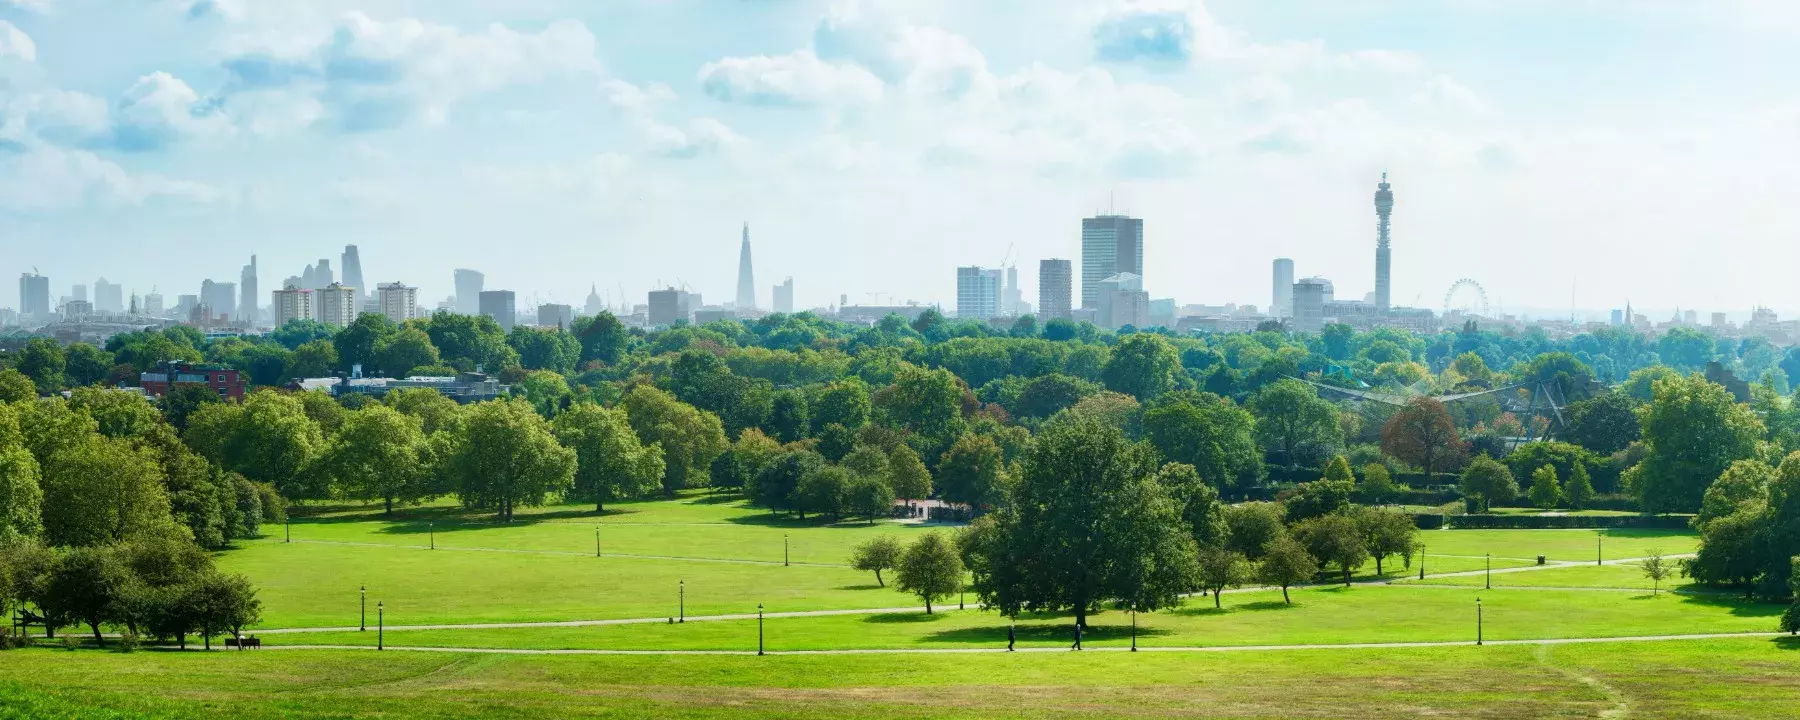 London-park-skyline 